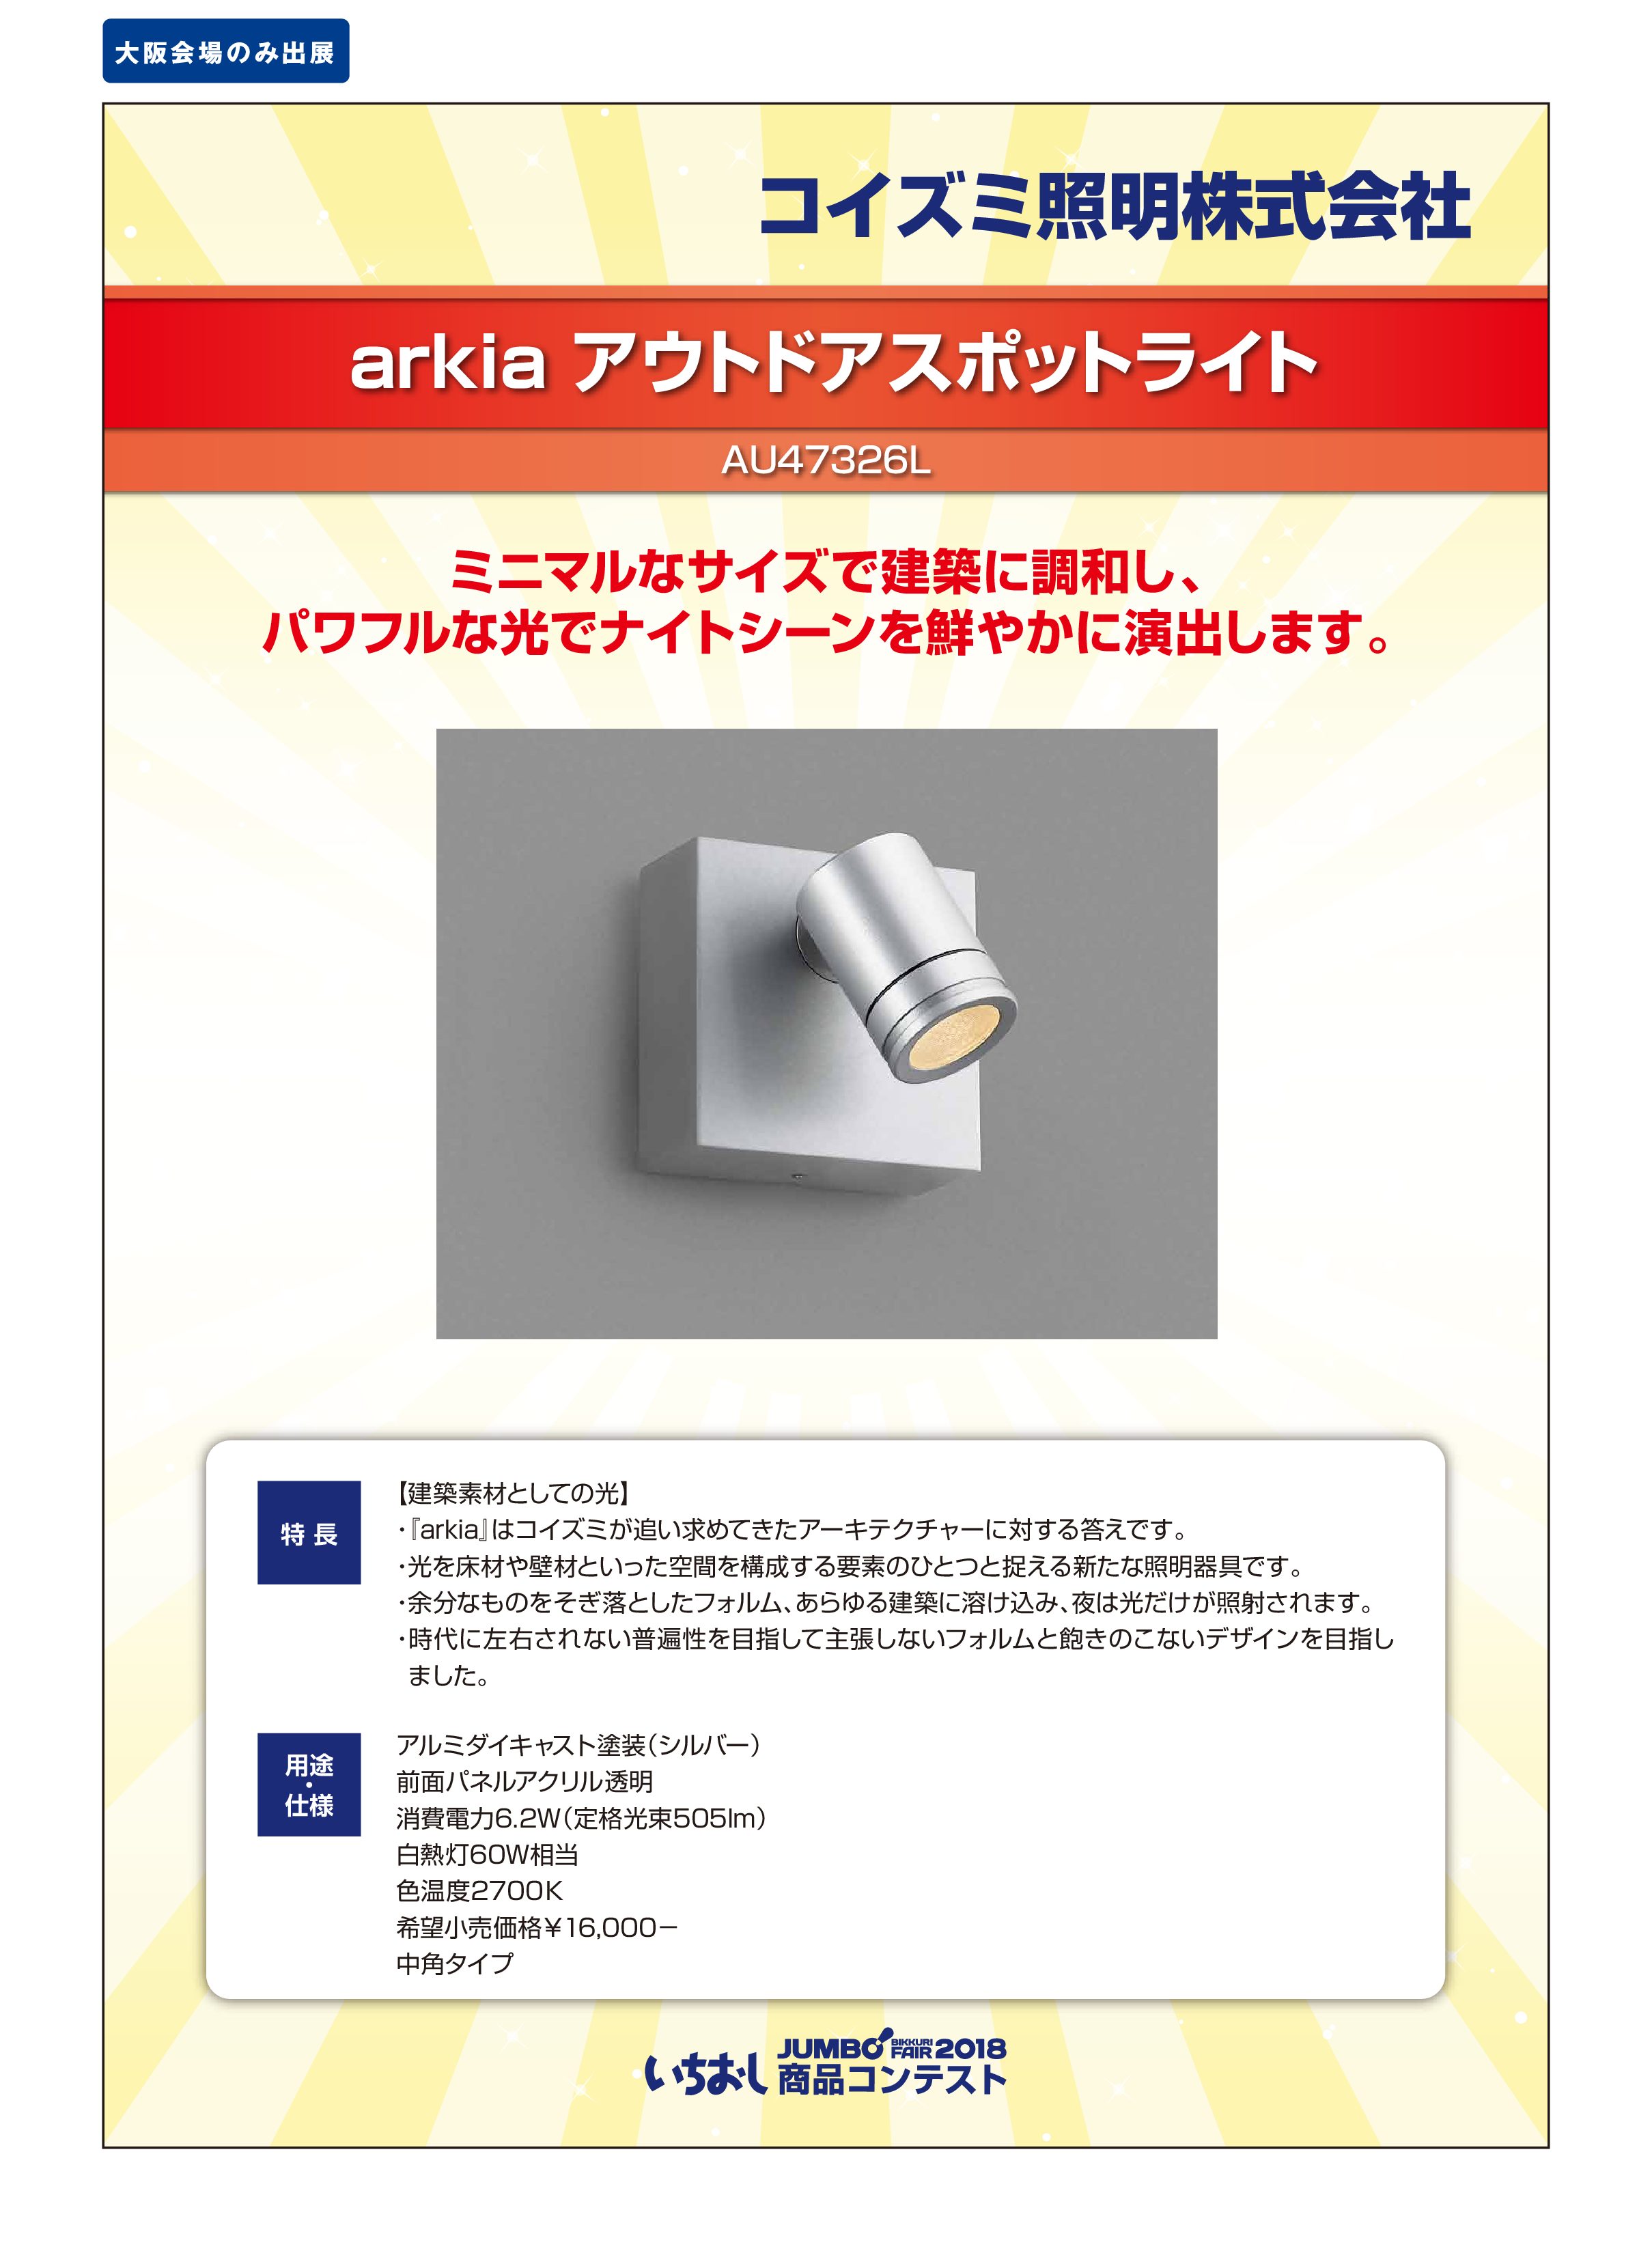 「arkia アウトドアスポットライト」コイズミ照明株式会社の画像